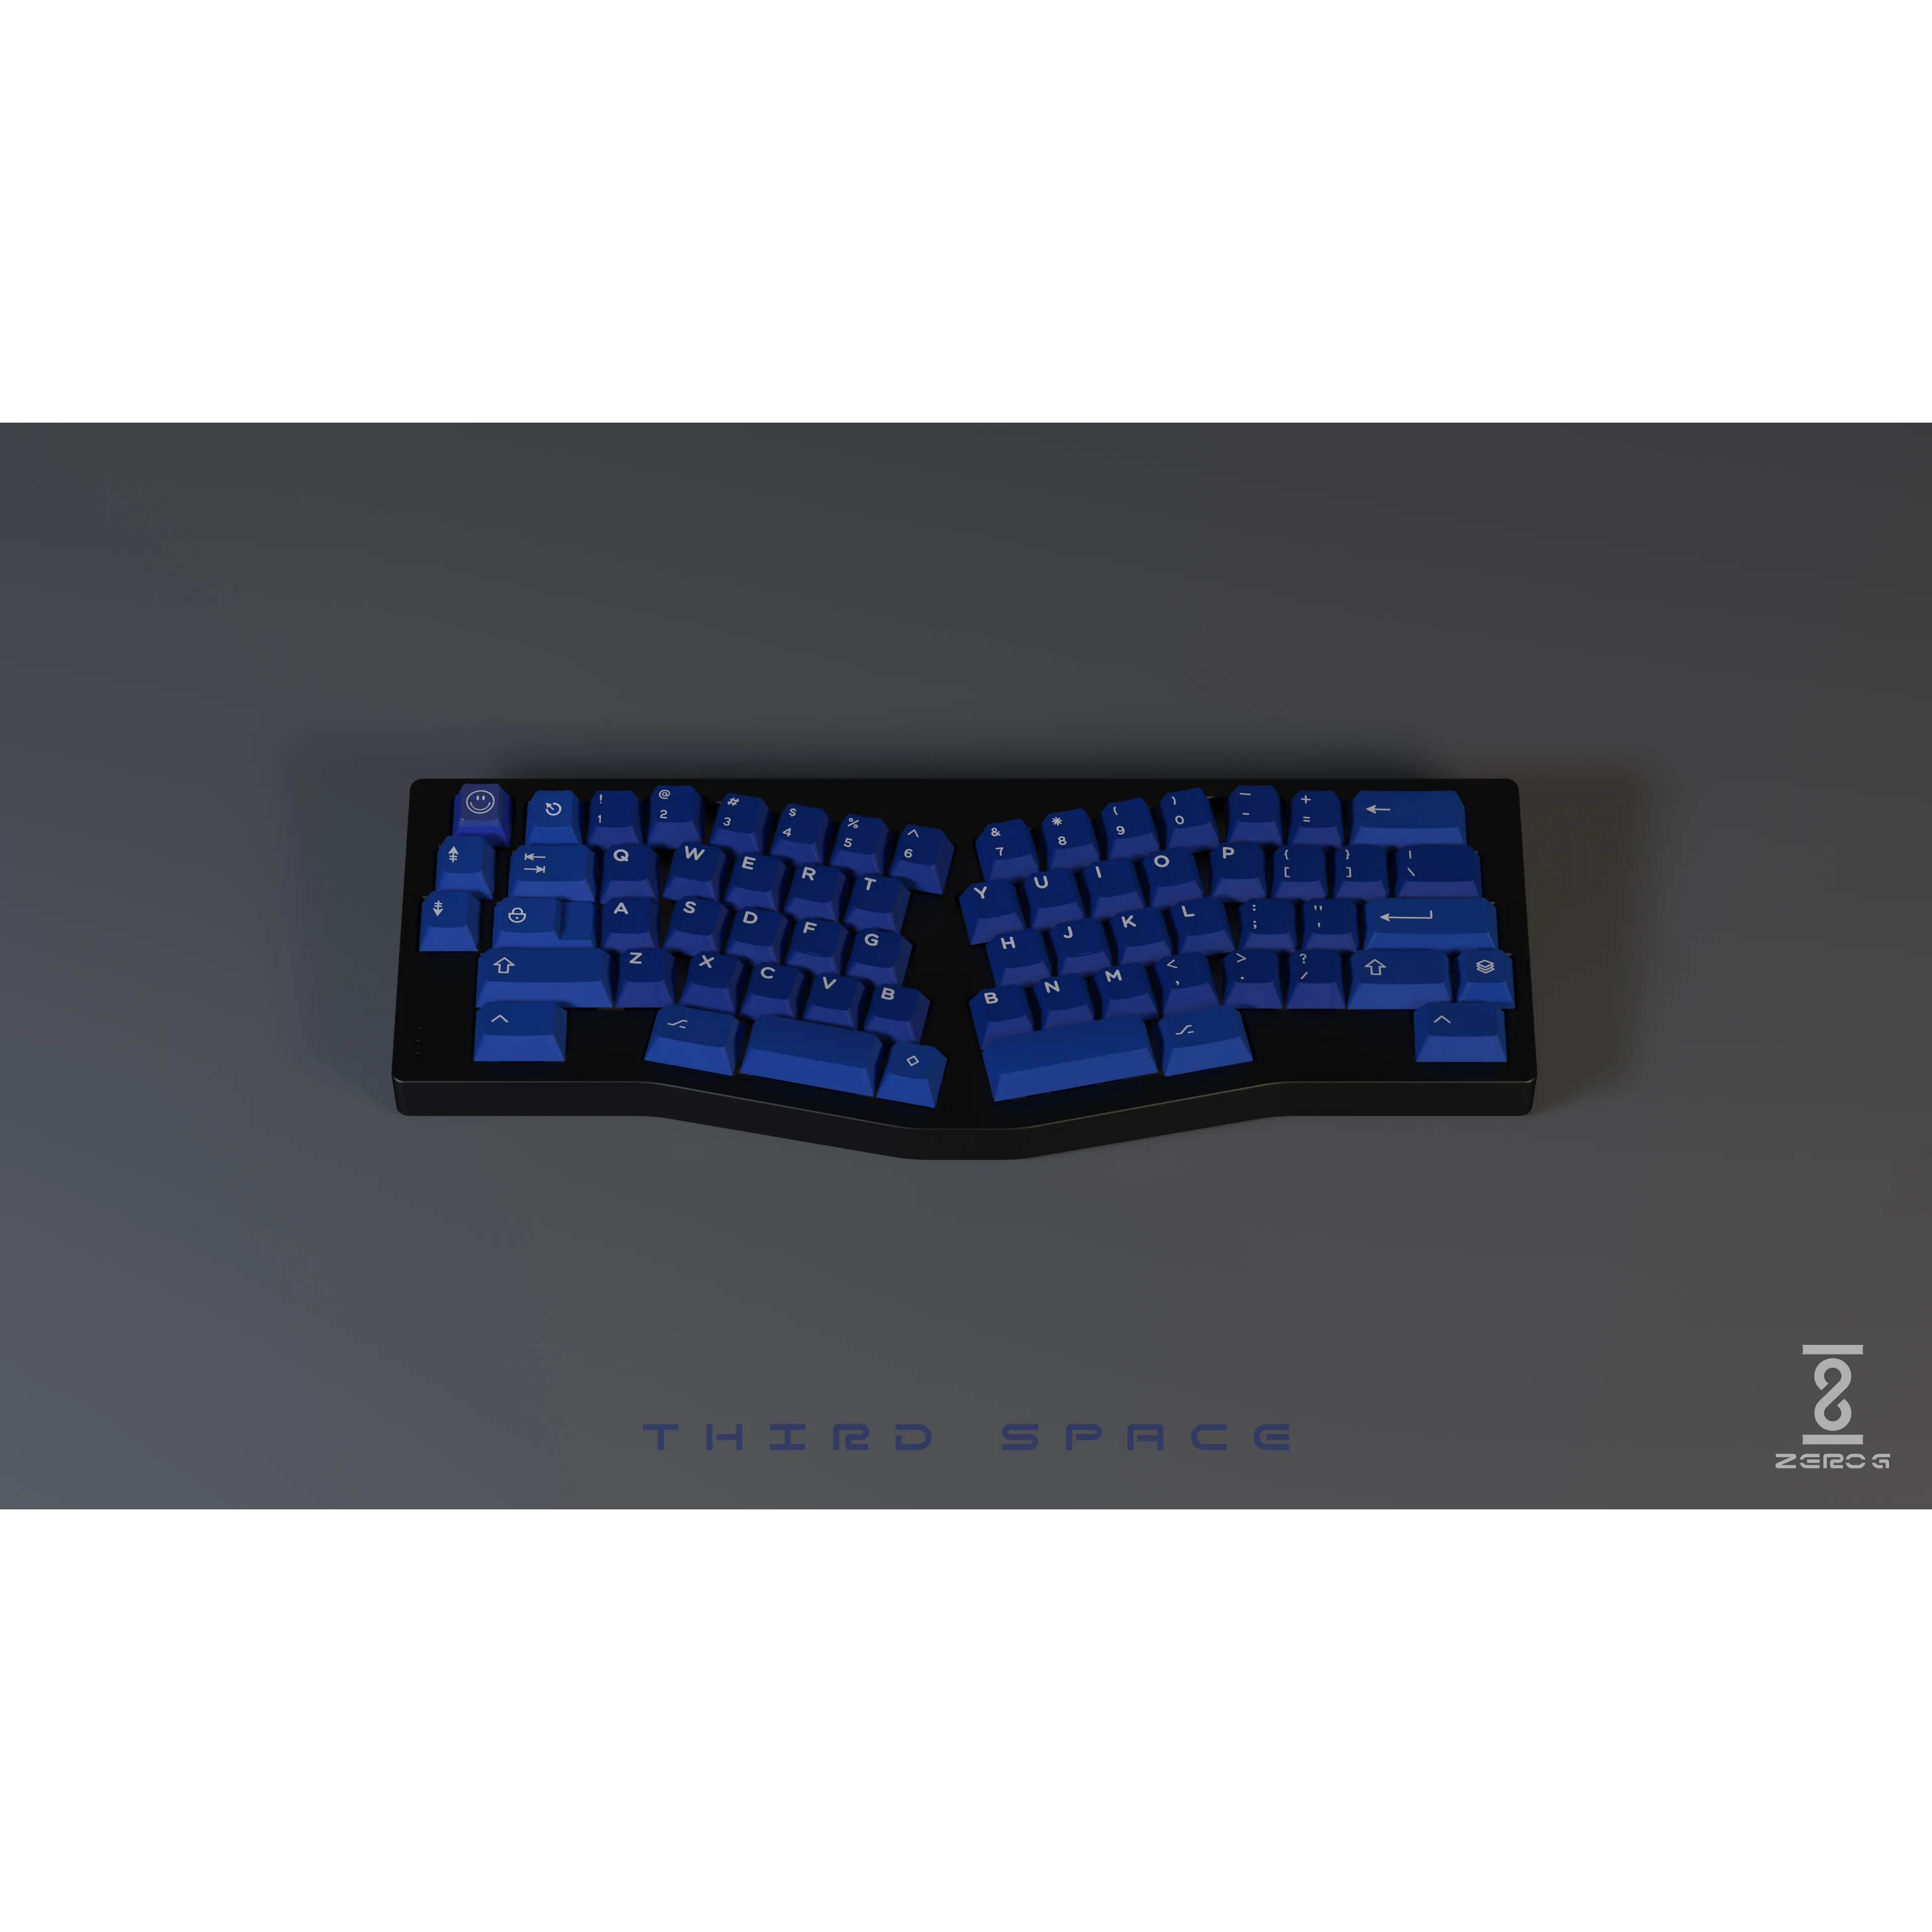 Image for Zero-G Studio X DMK ABS Keycaps "THIRD SPACE"